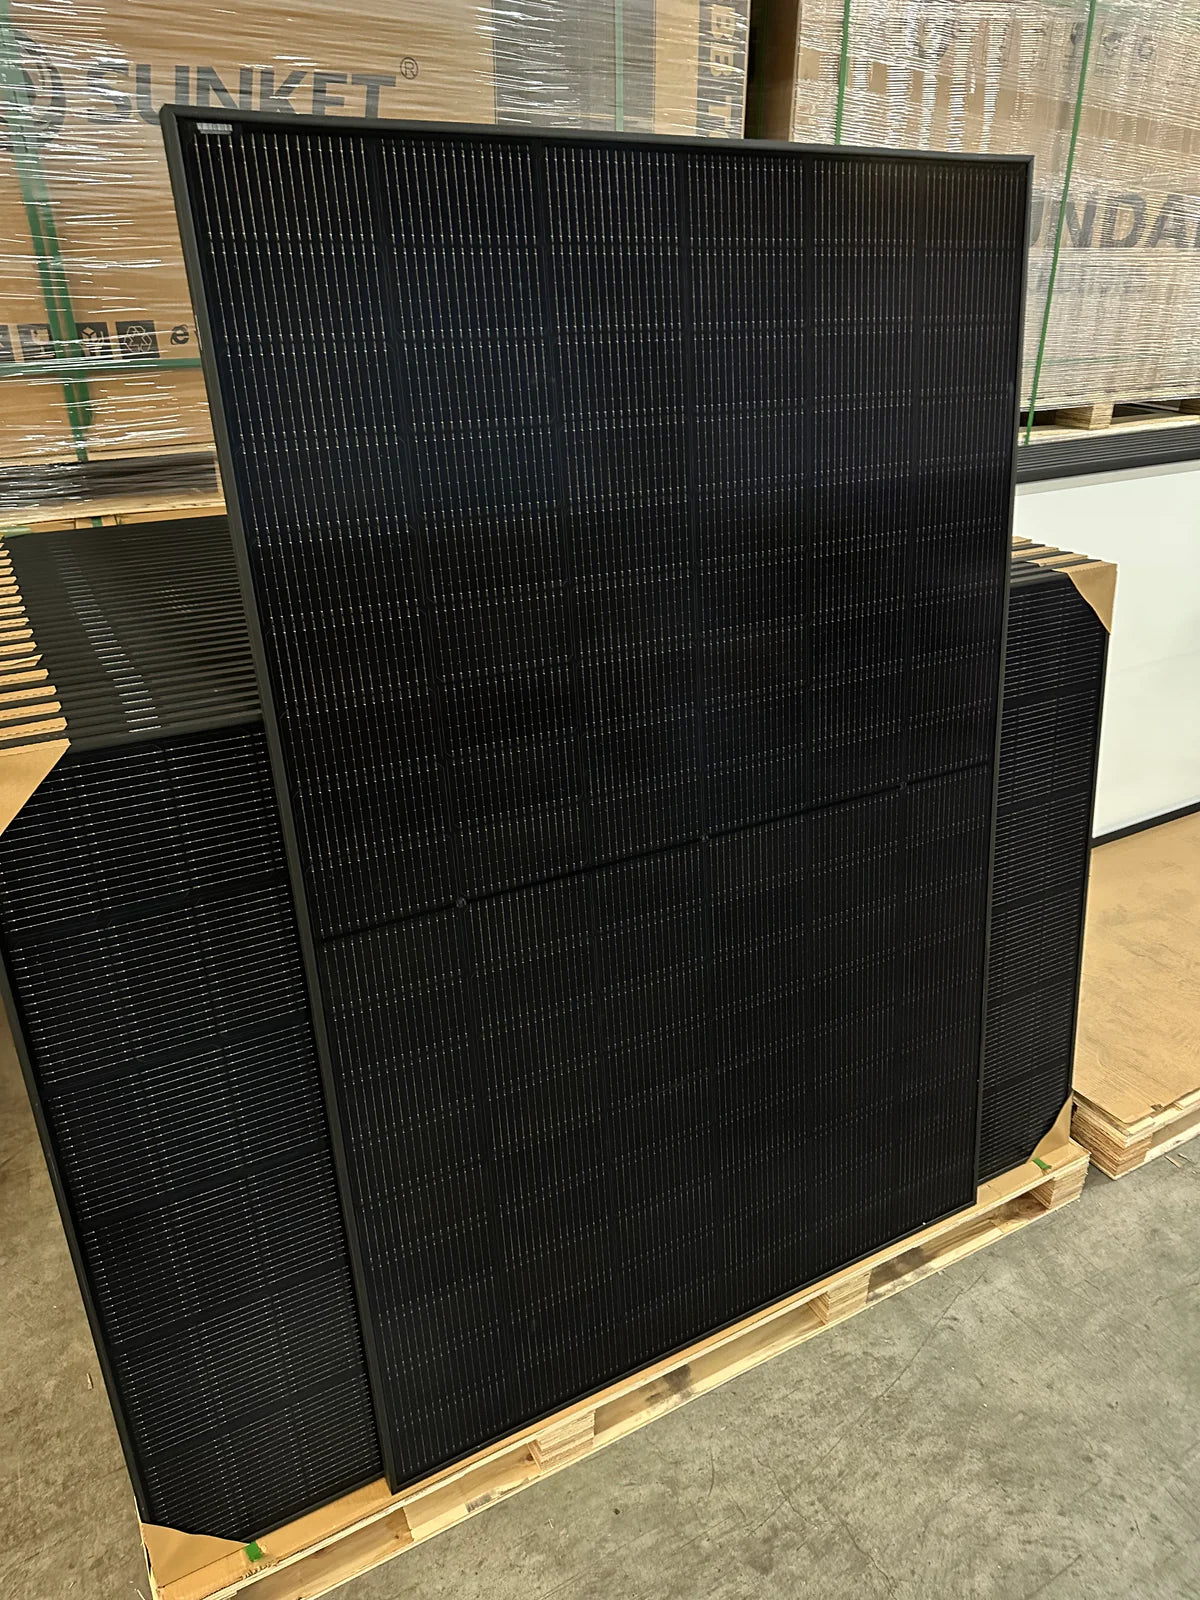 440W SUNKET TOPCon Bifacial N-Type Solarmodule 1762x1134x30 Photovoltaik Solarpanel